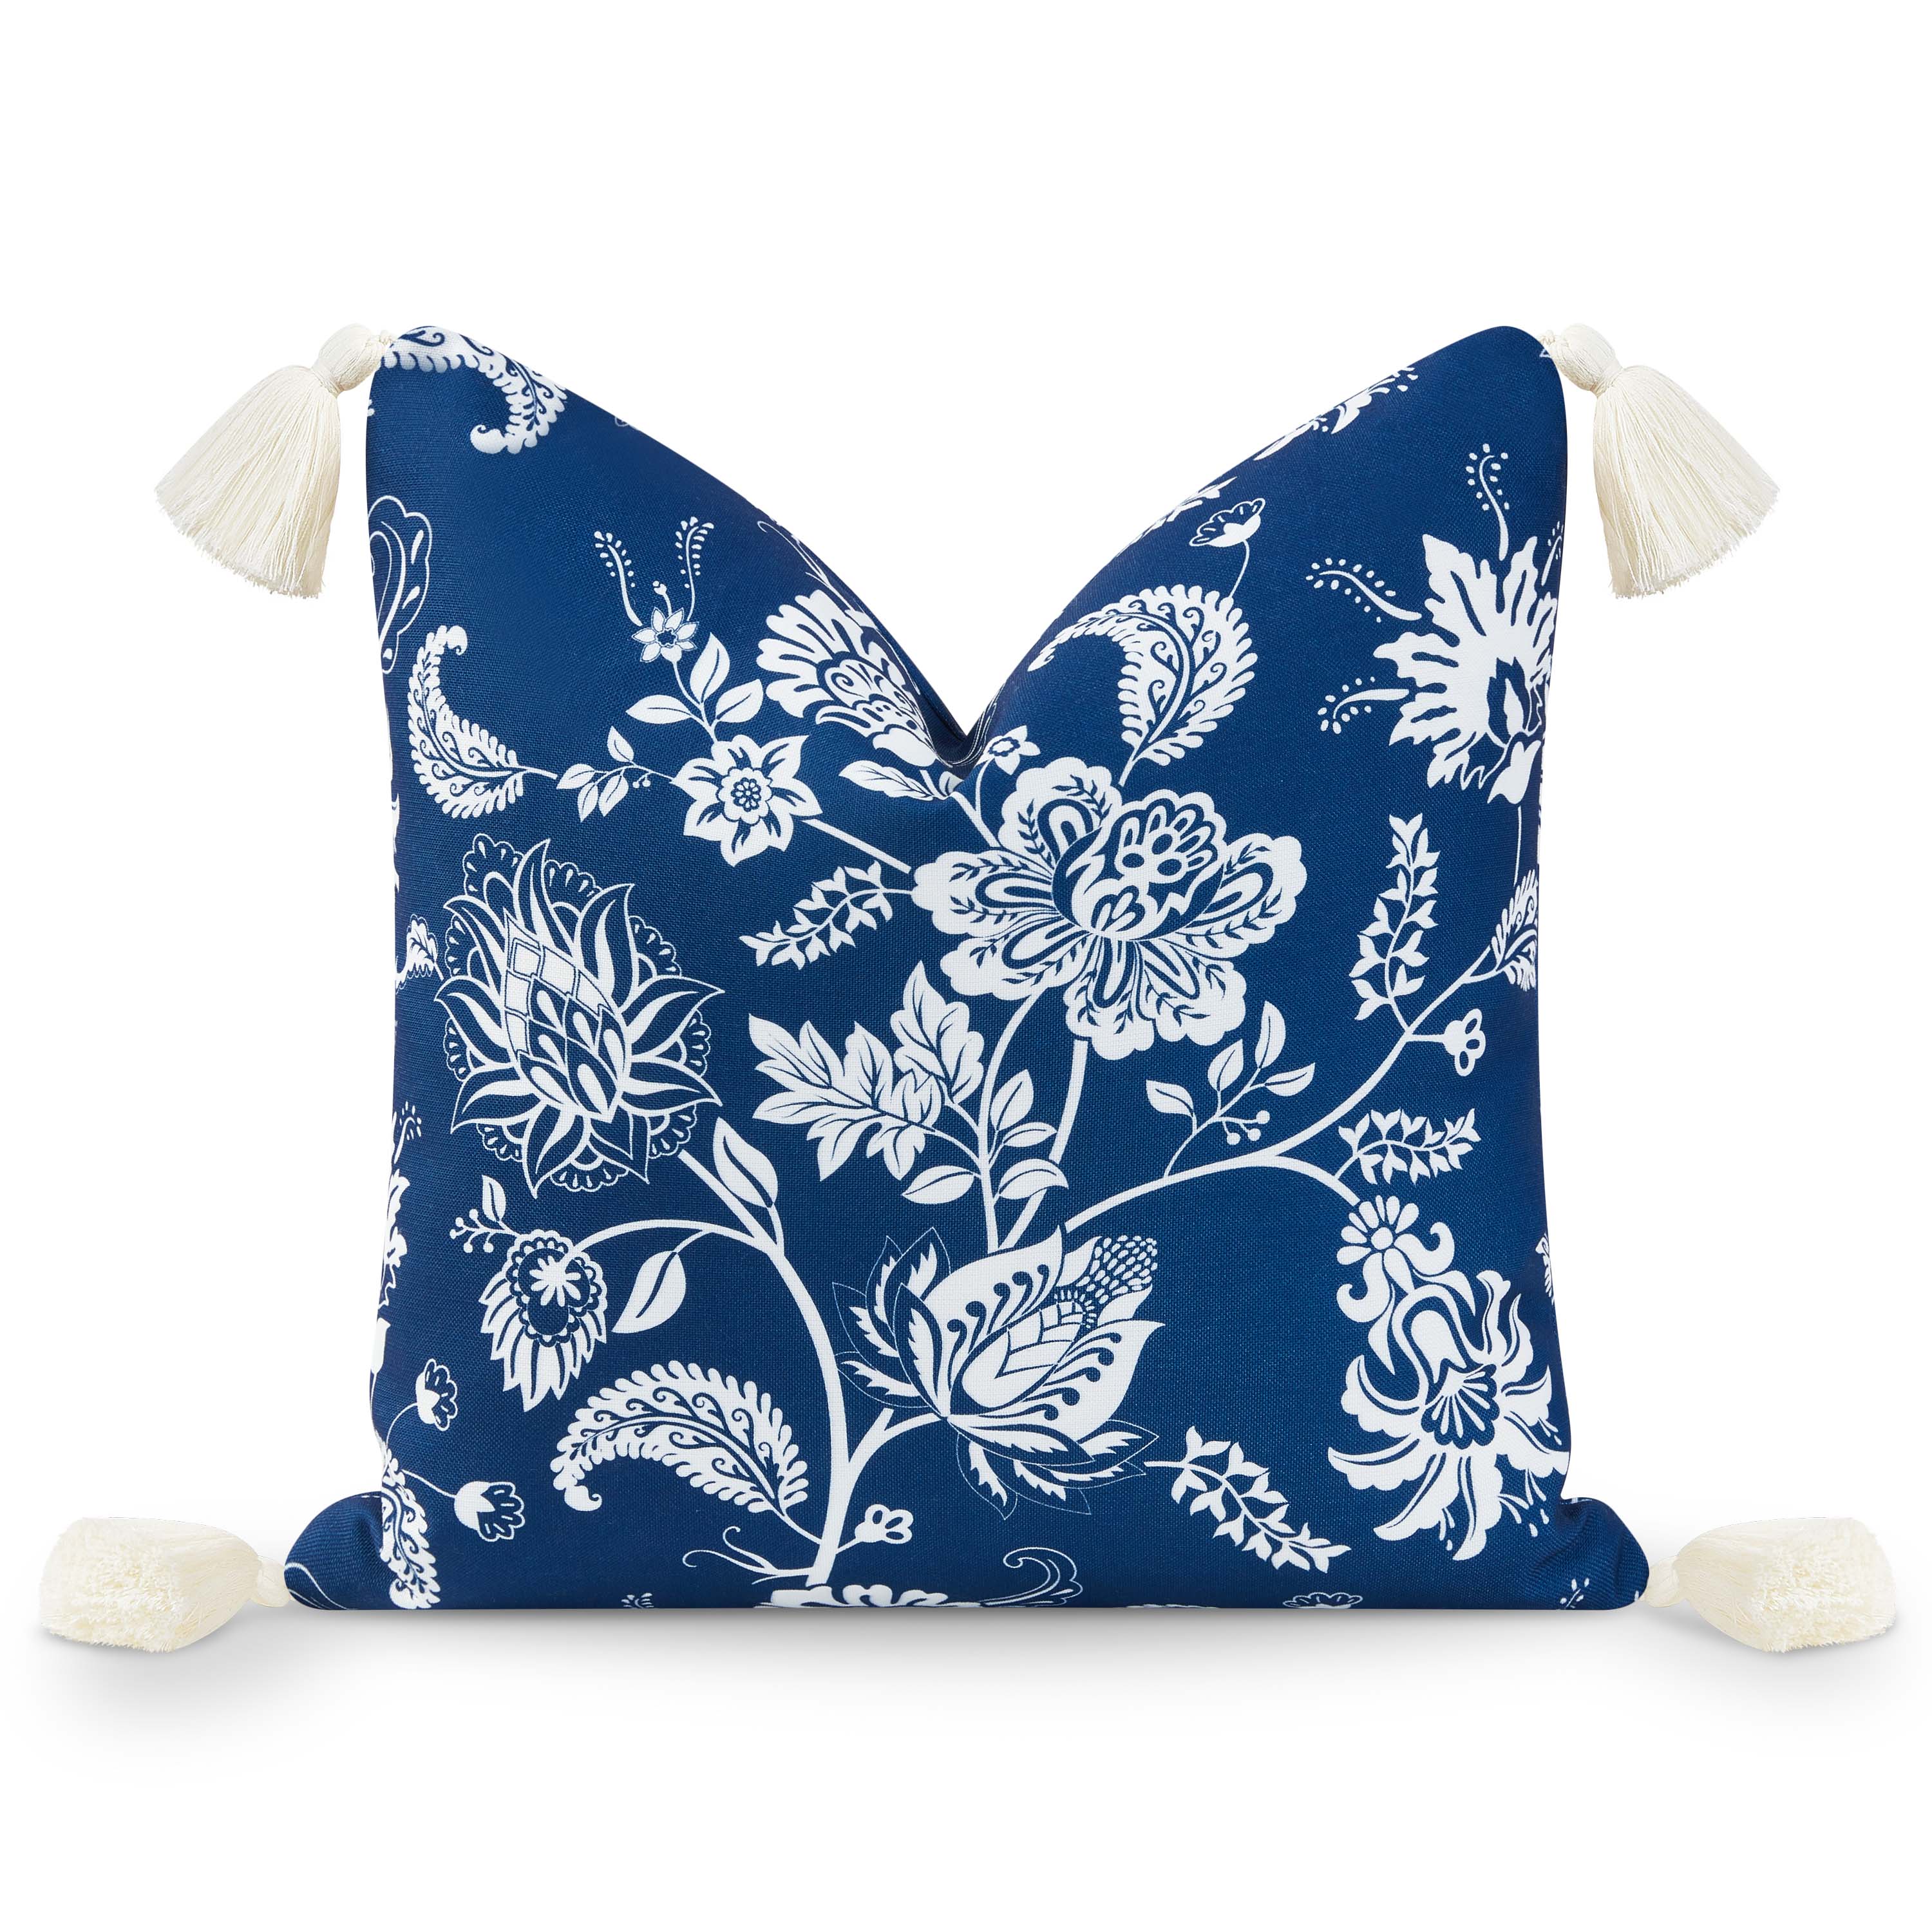 Coastal Hampton Style Indoor Outdoor Throw Pillow Cover, Floral Tassel, Navy Blue, 18"x18"